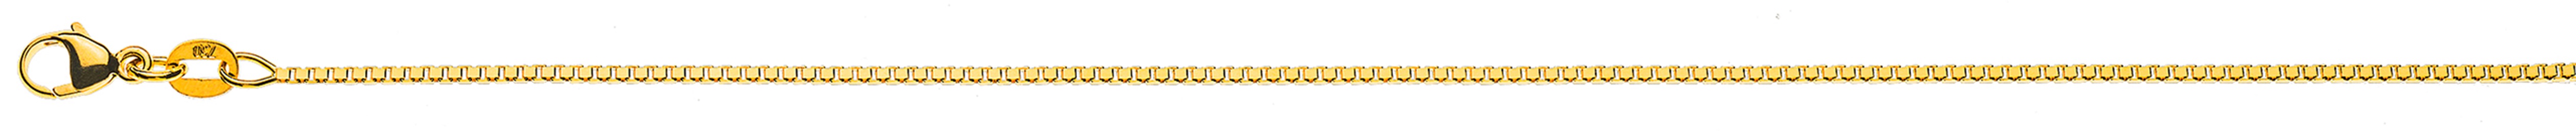 AURONOS Style Necklace yellow gold 9K Venetian chain diamond cut 38cm 1.1mm